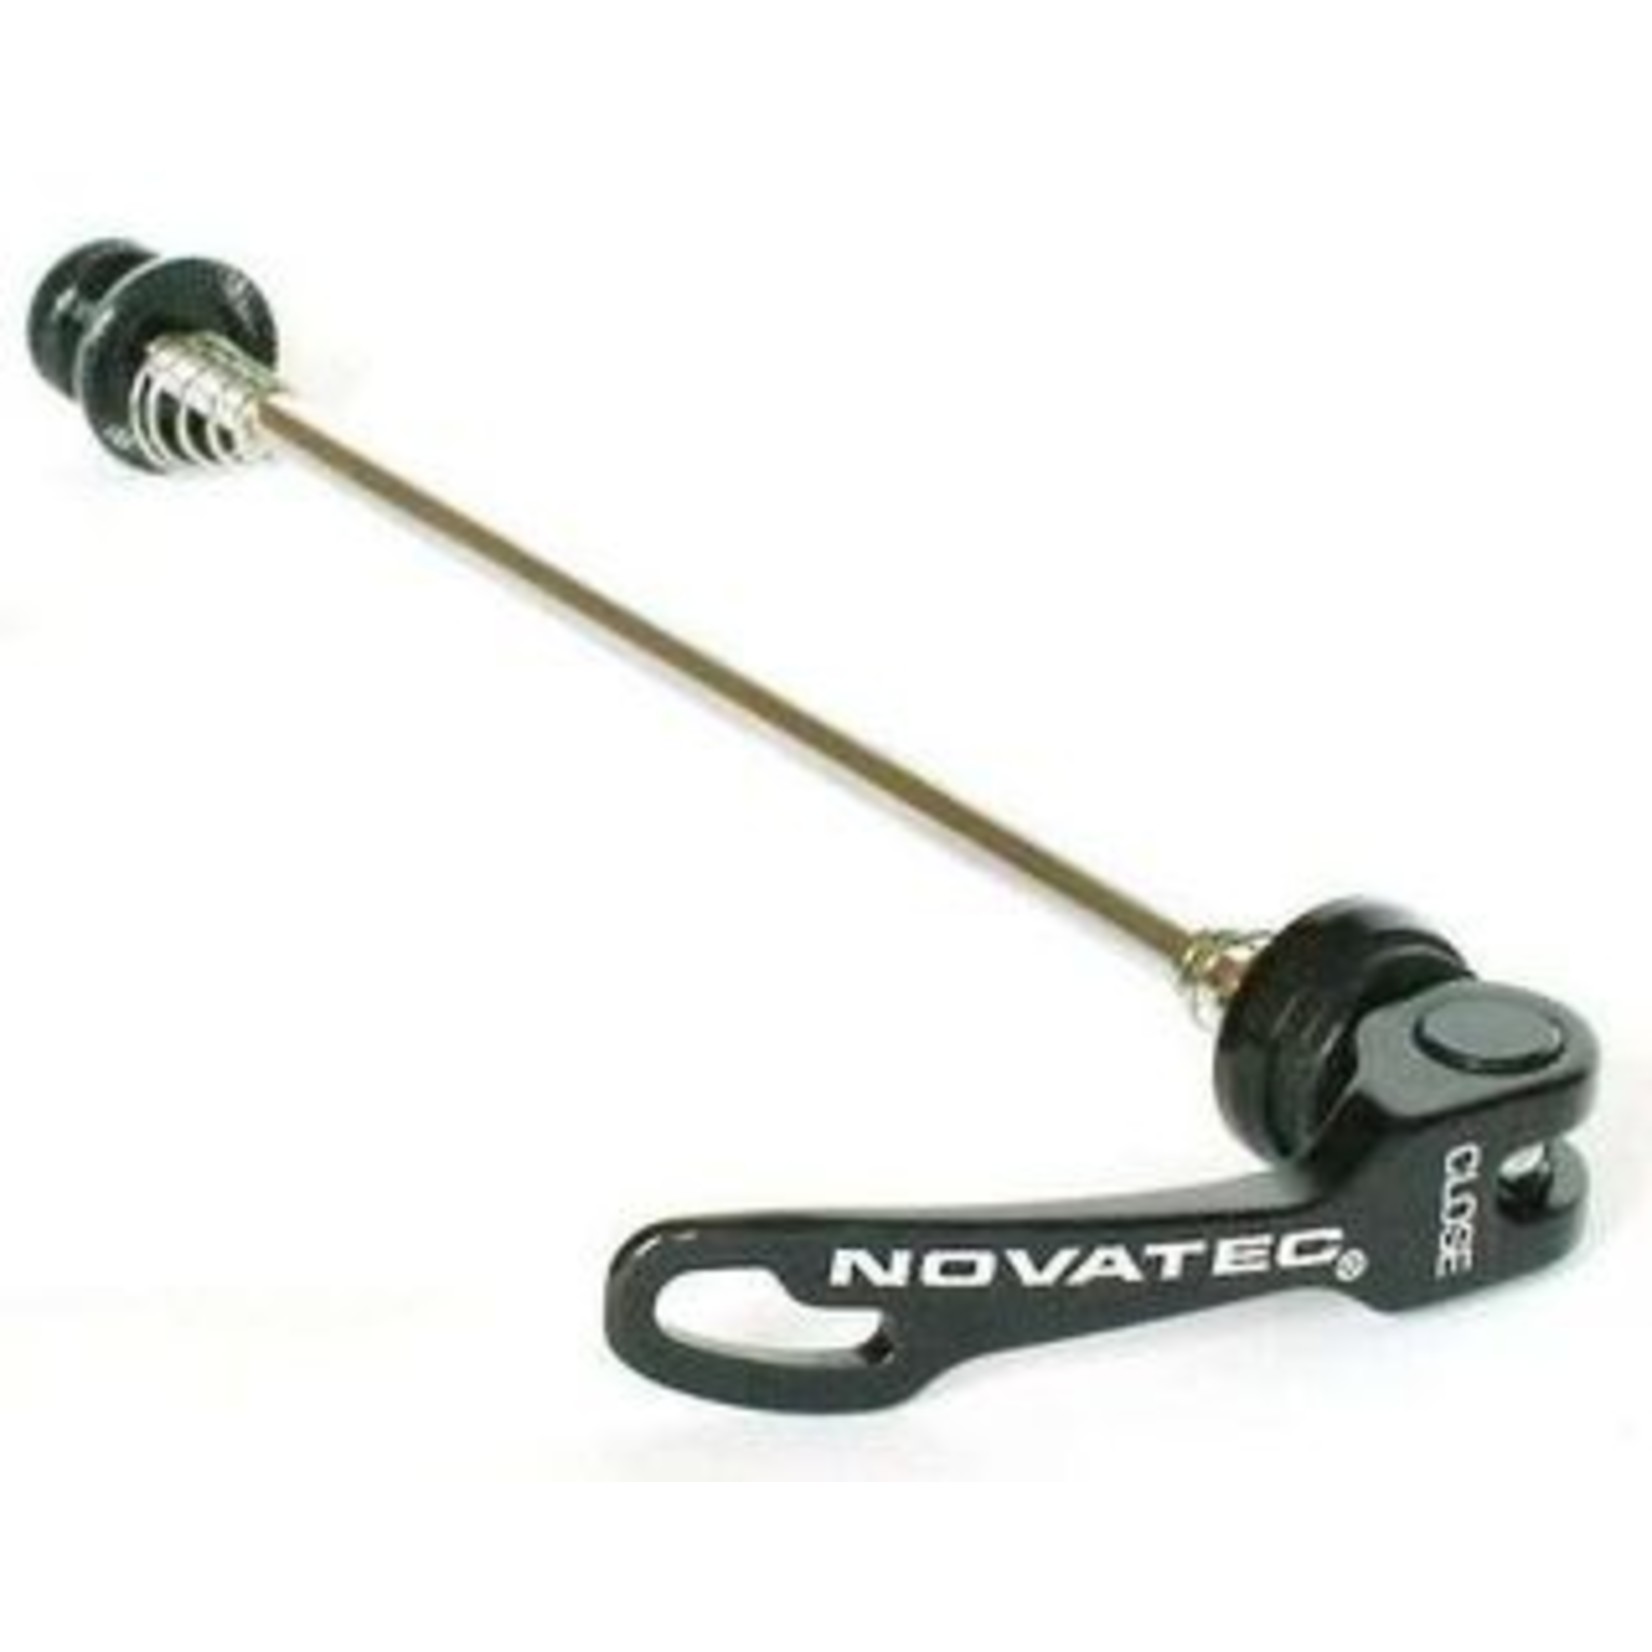 Novatec Novatec - Bike/Cycling Rear Skewer - Nylon Bushings - 7005 Alloy Levers & Ends  - 45G